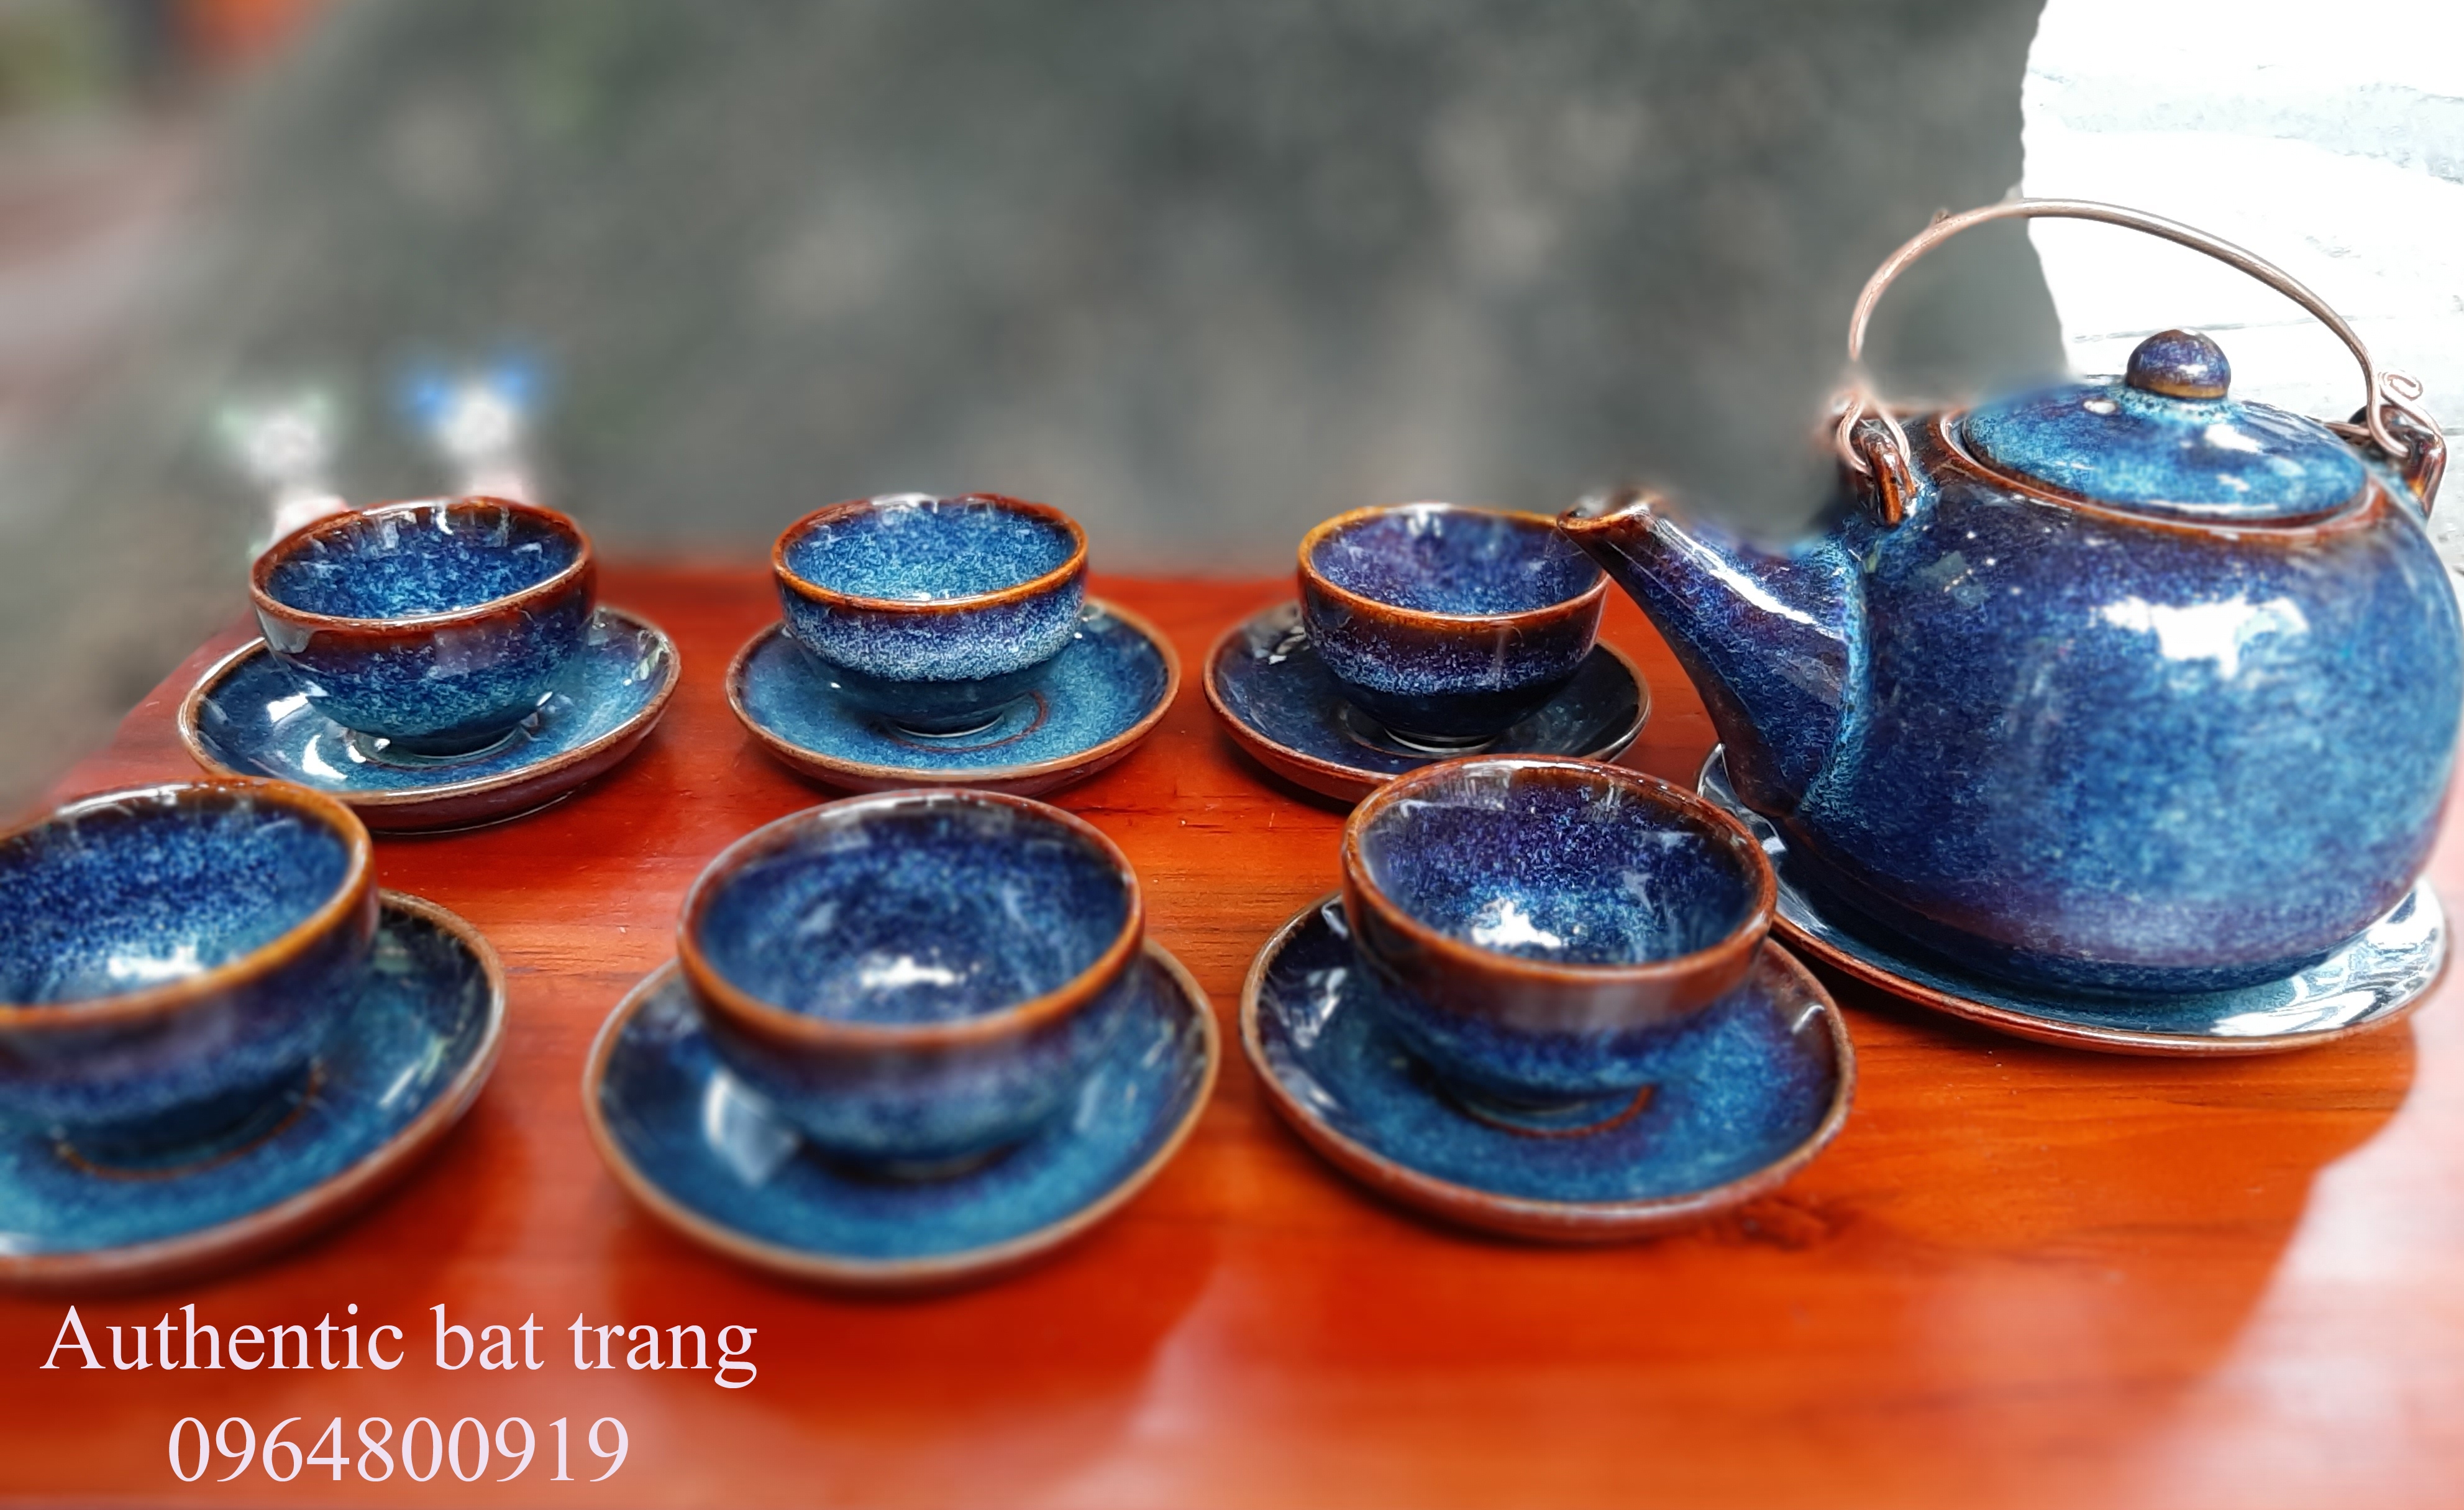 Blue tea set - make by Gia Oanh Authentic bat trang ceramics/ bộ ấm trà men xanh hỏa biến